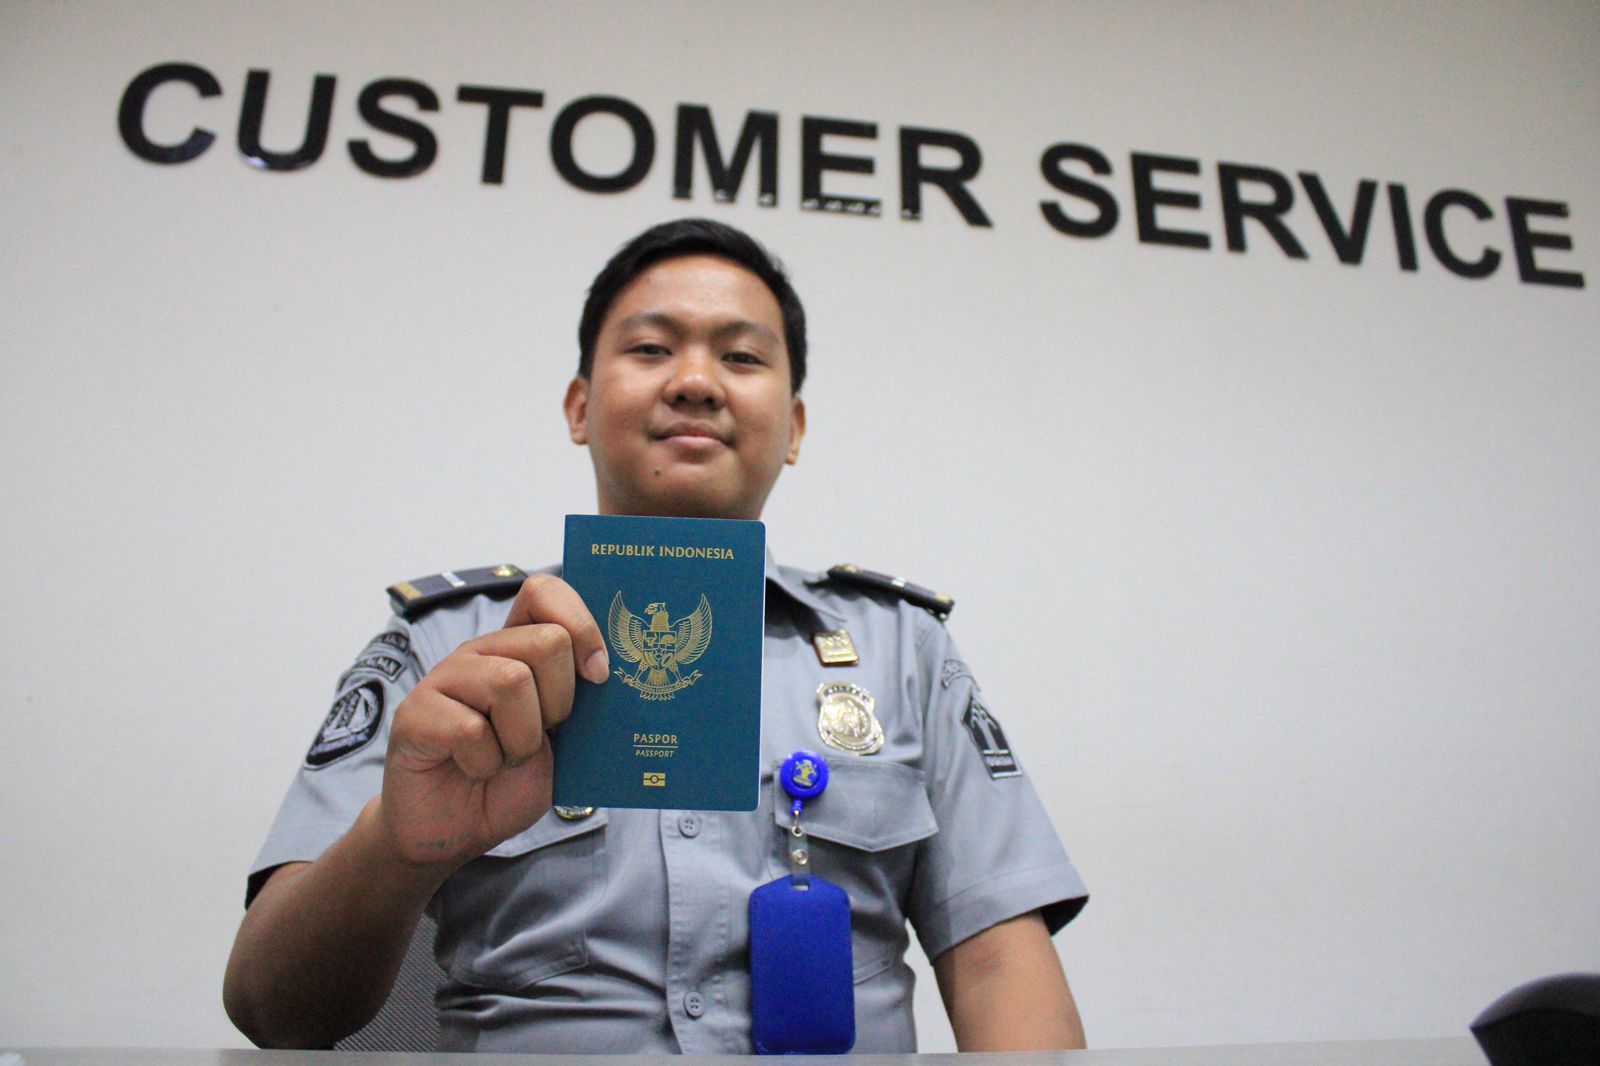 Fitur Semakin Canggih, Permohonan E-Paspor di Imigrasi Balikpapan Meningkat